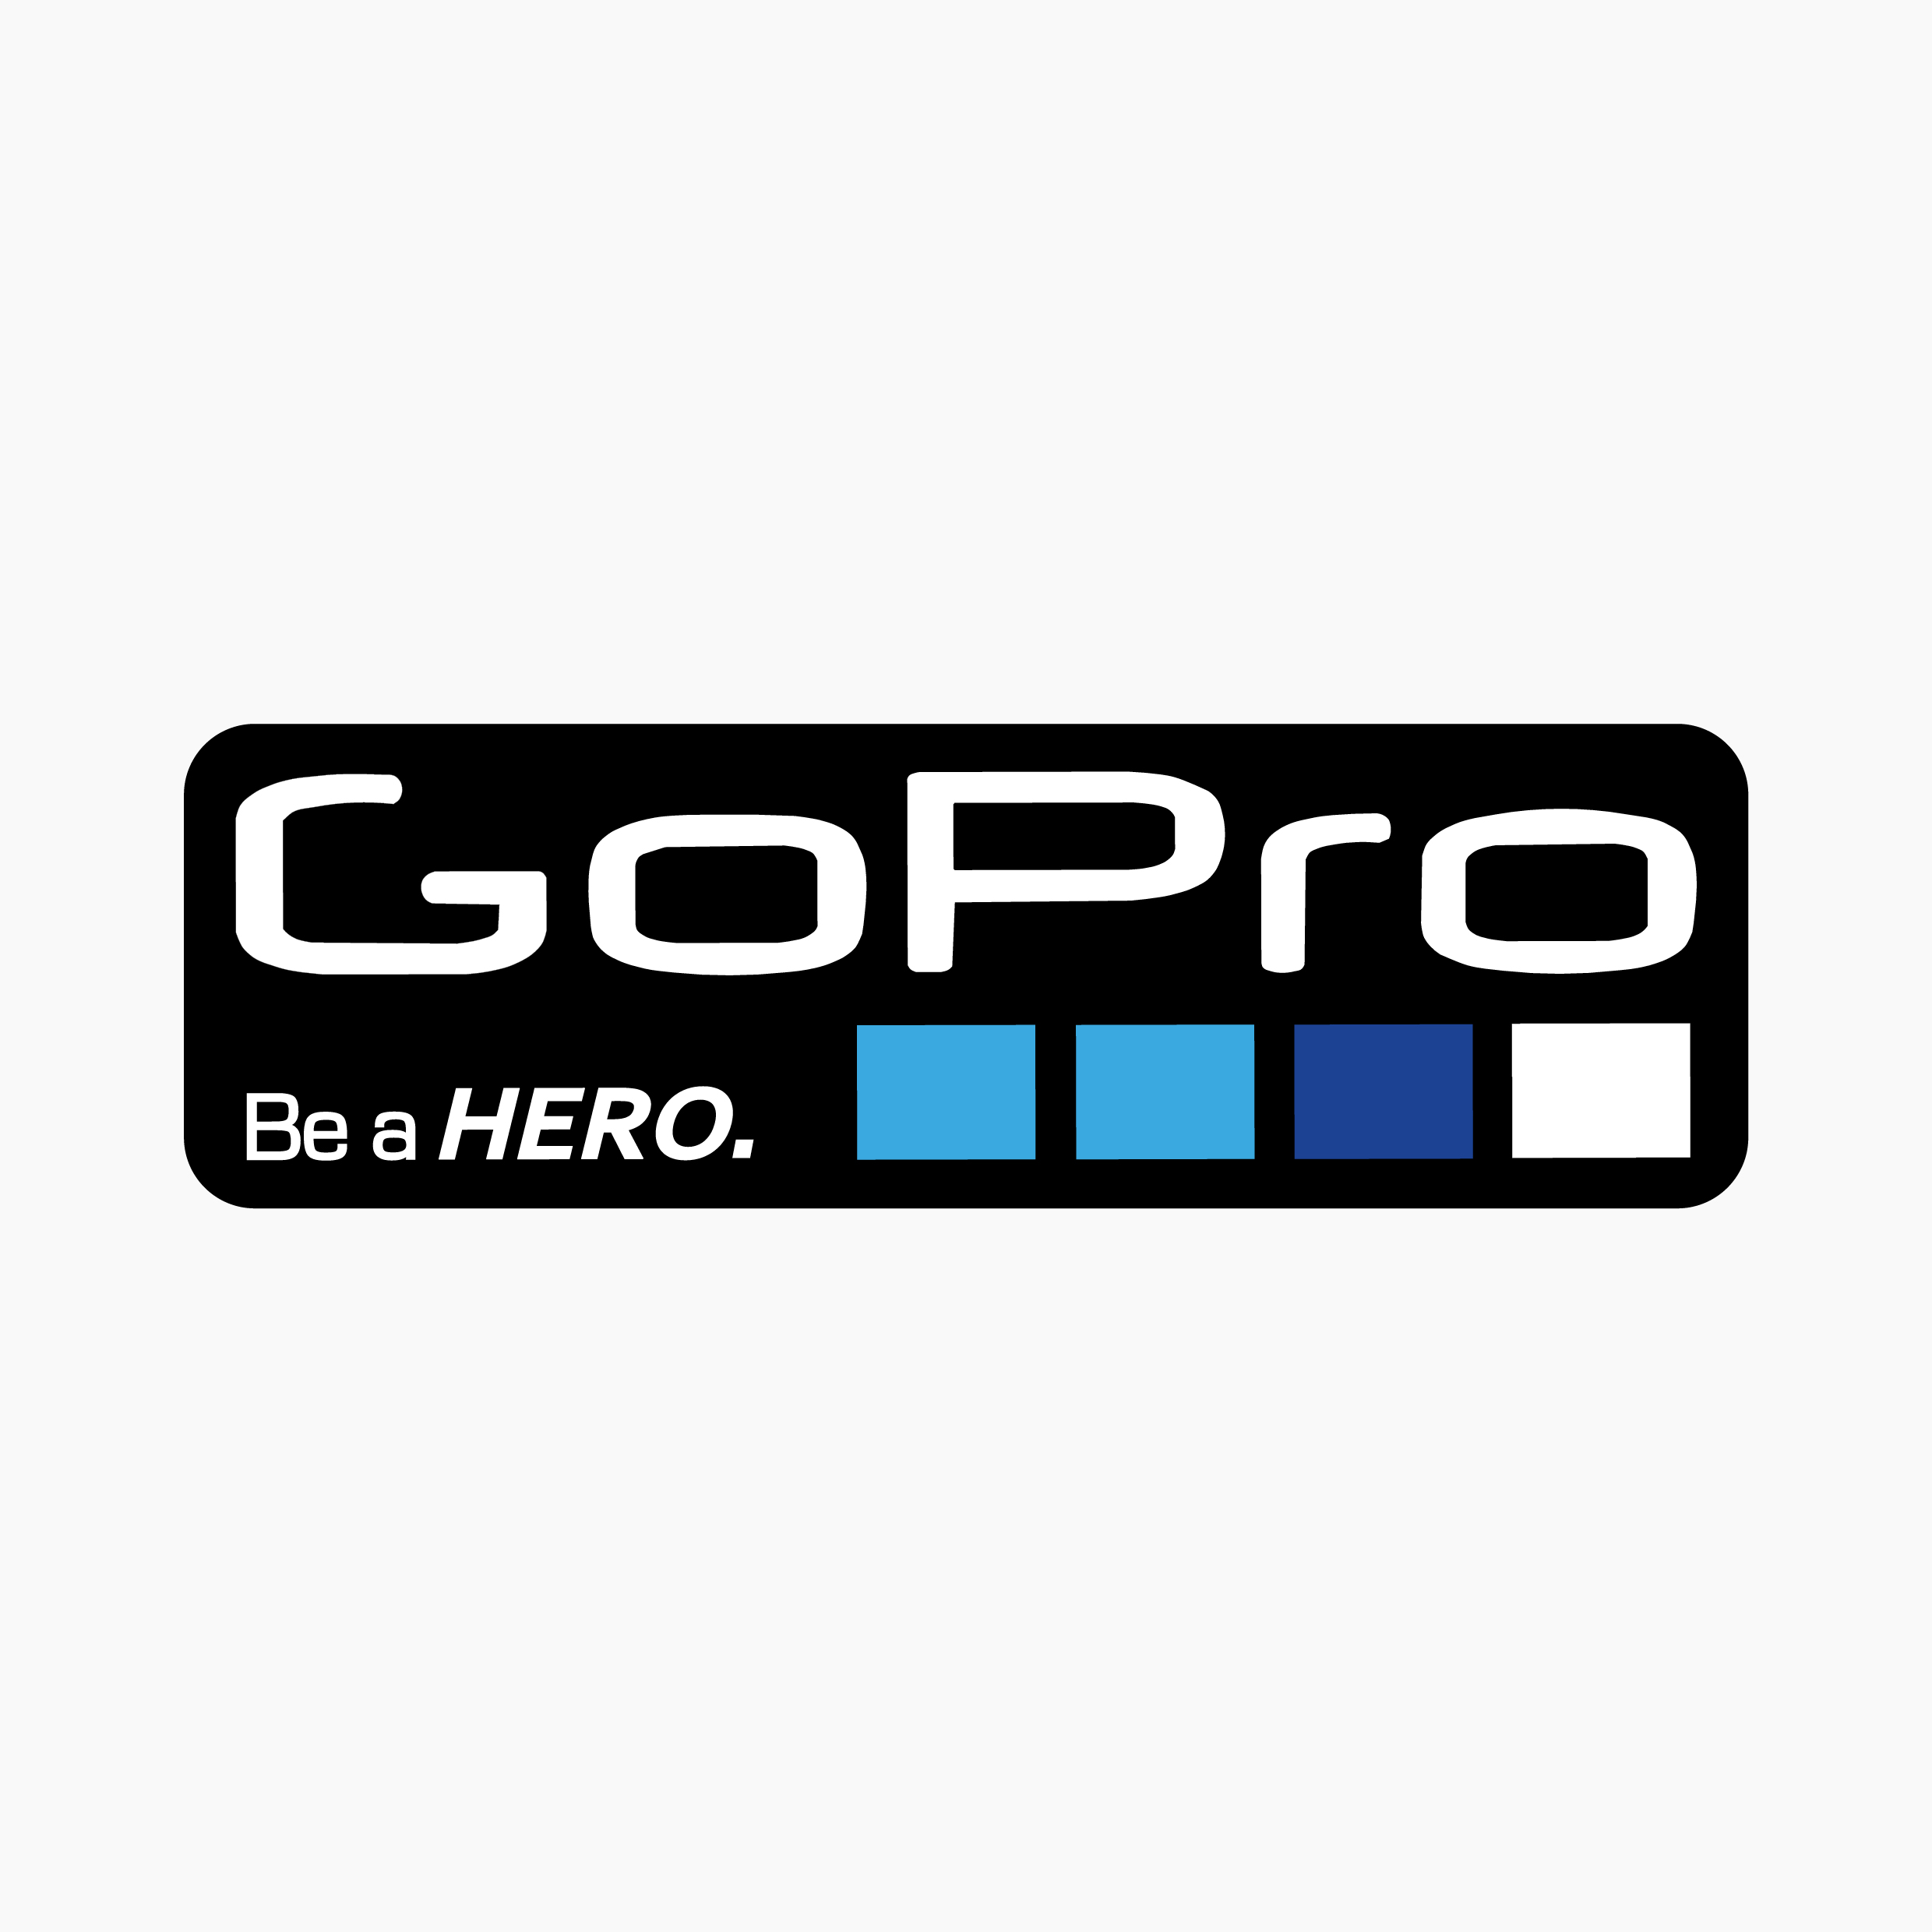 stickers-go-pro-be-a-heroref2-skate-skateboard-sport-extreme-autocollant-sticker-auto-surf-snowboard-camera-planche-autocollants-decals-sponsors-logo